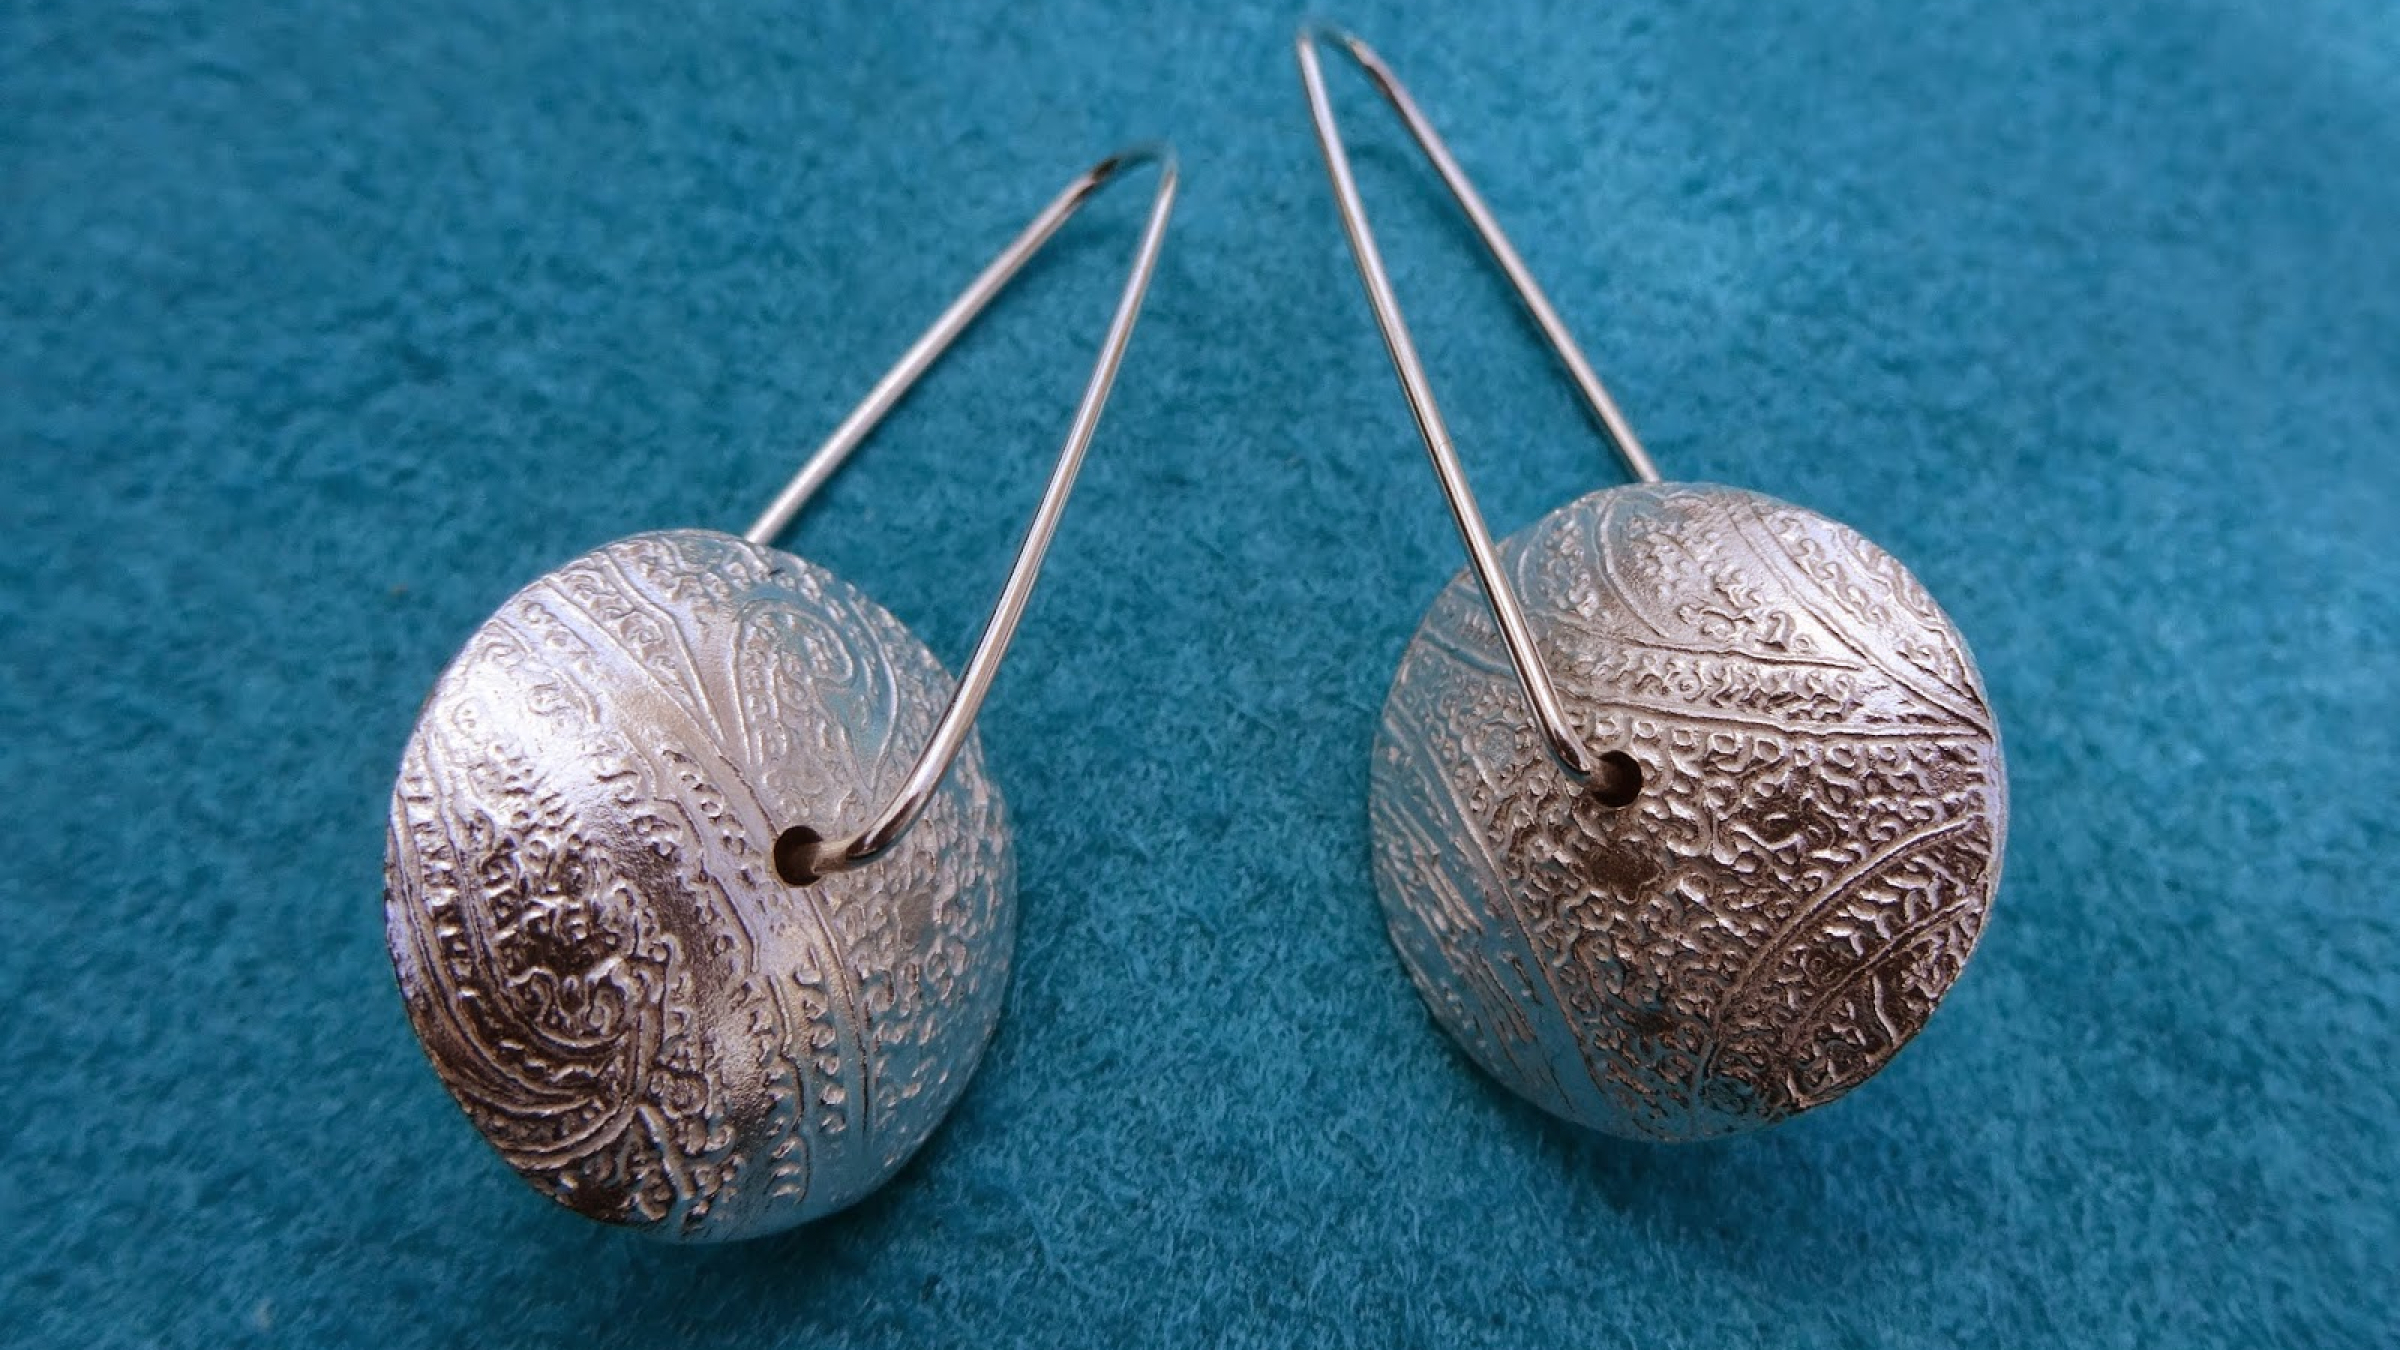 Earrings from Precious Metal Clay